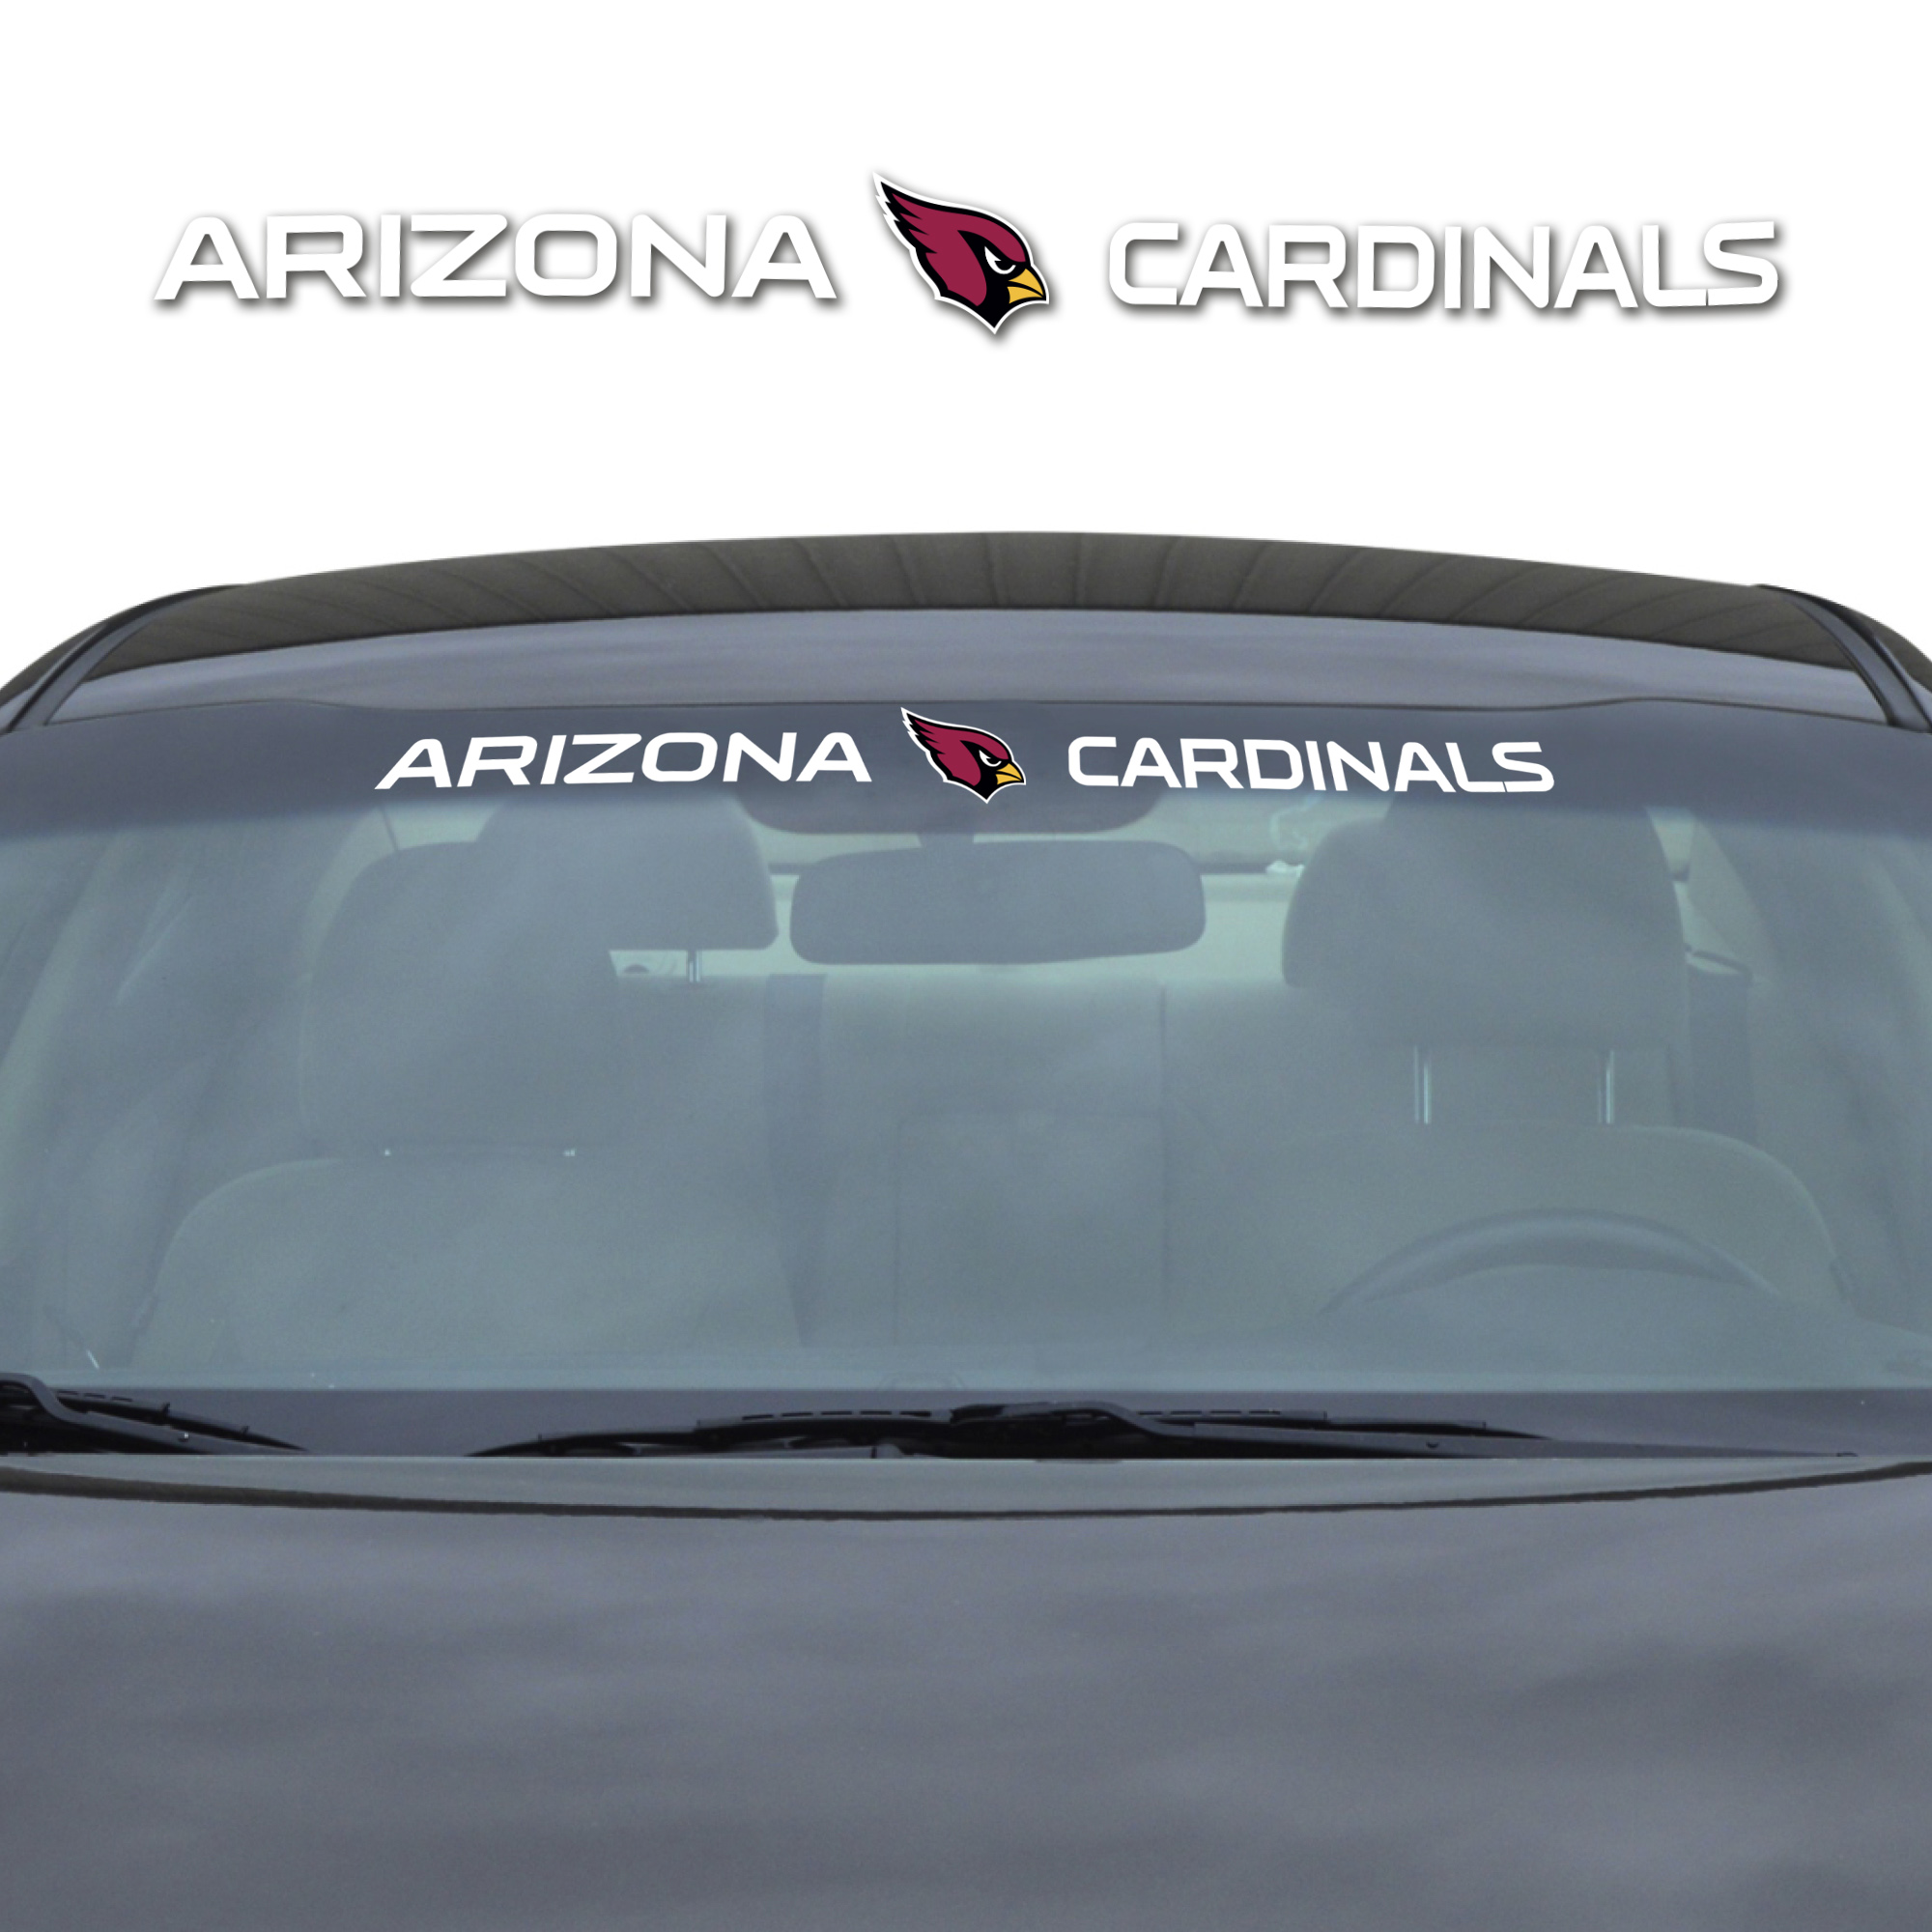 Arizona Cardinals Windshield Decal